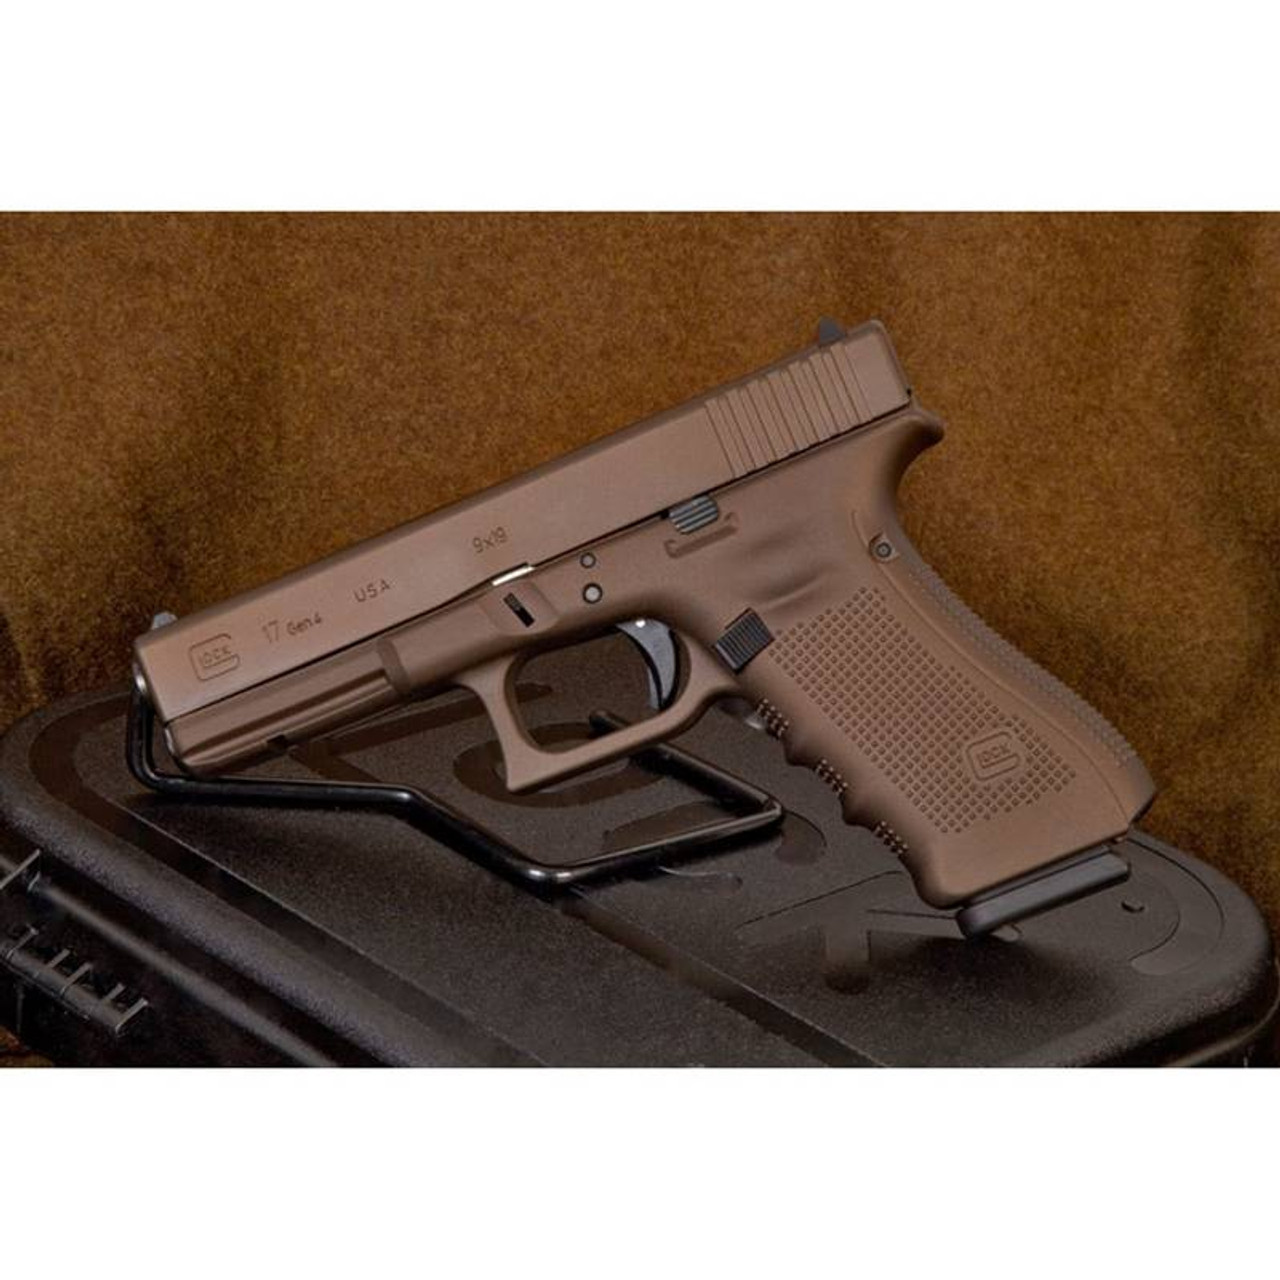 Glock G17 G4 9mm Luger in Midnight Bronze - 4.48 Barrel - Centerfire Systems